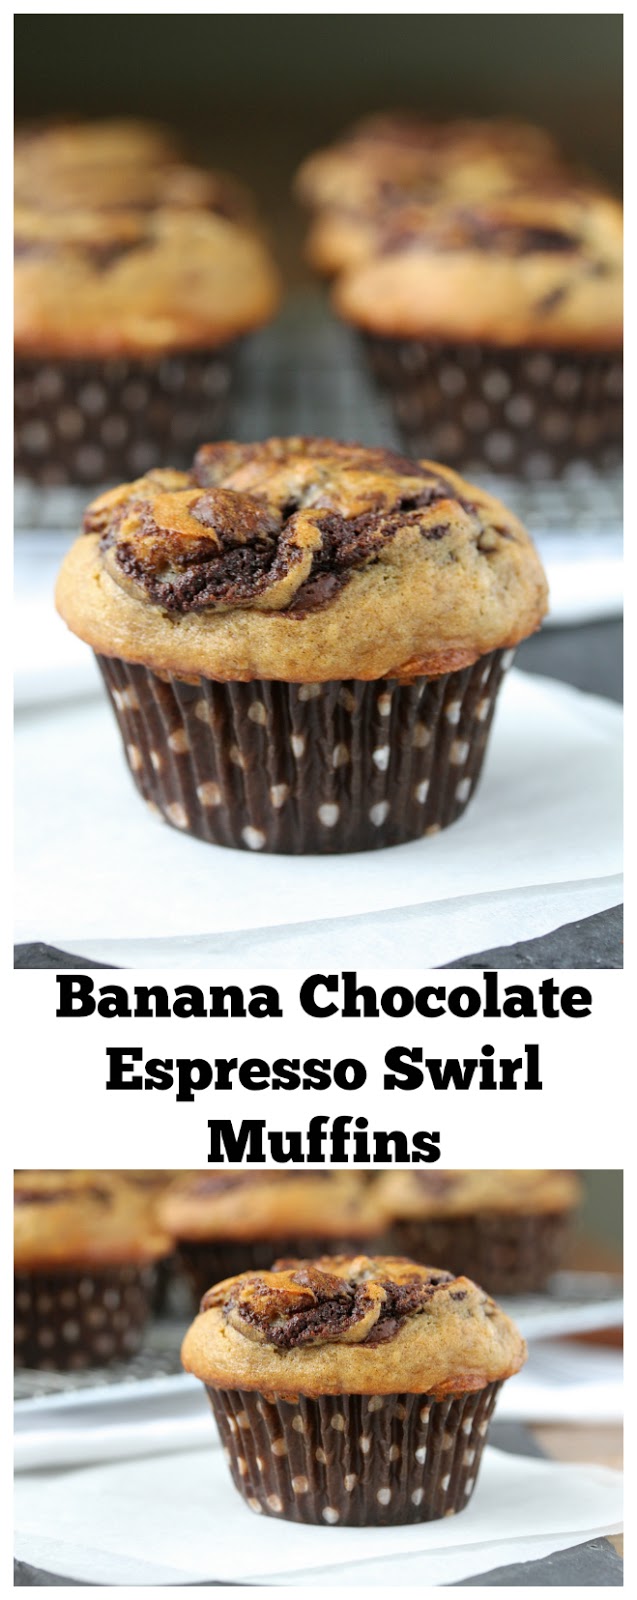 Banana Chocolate Espresso Swirl Muffins